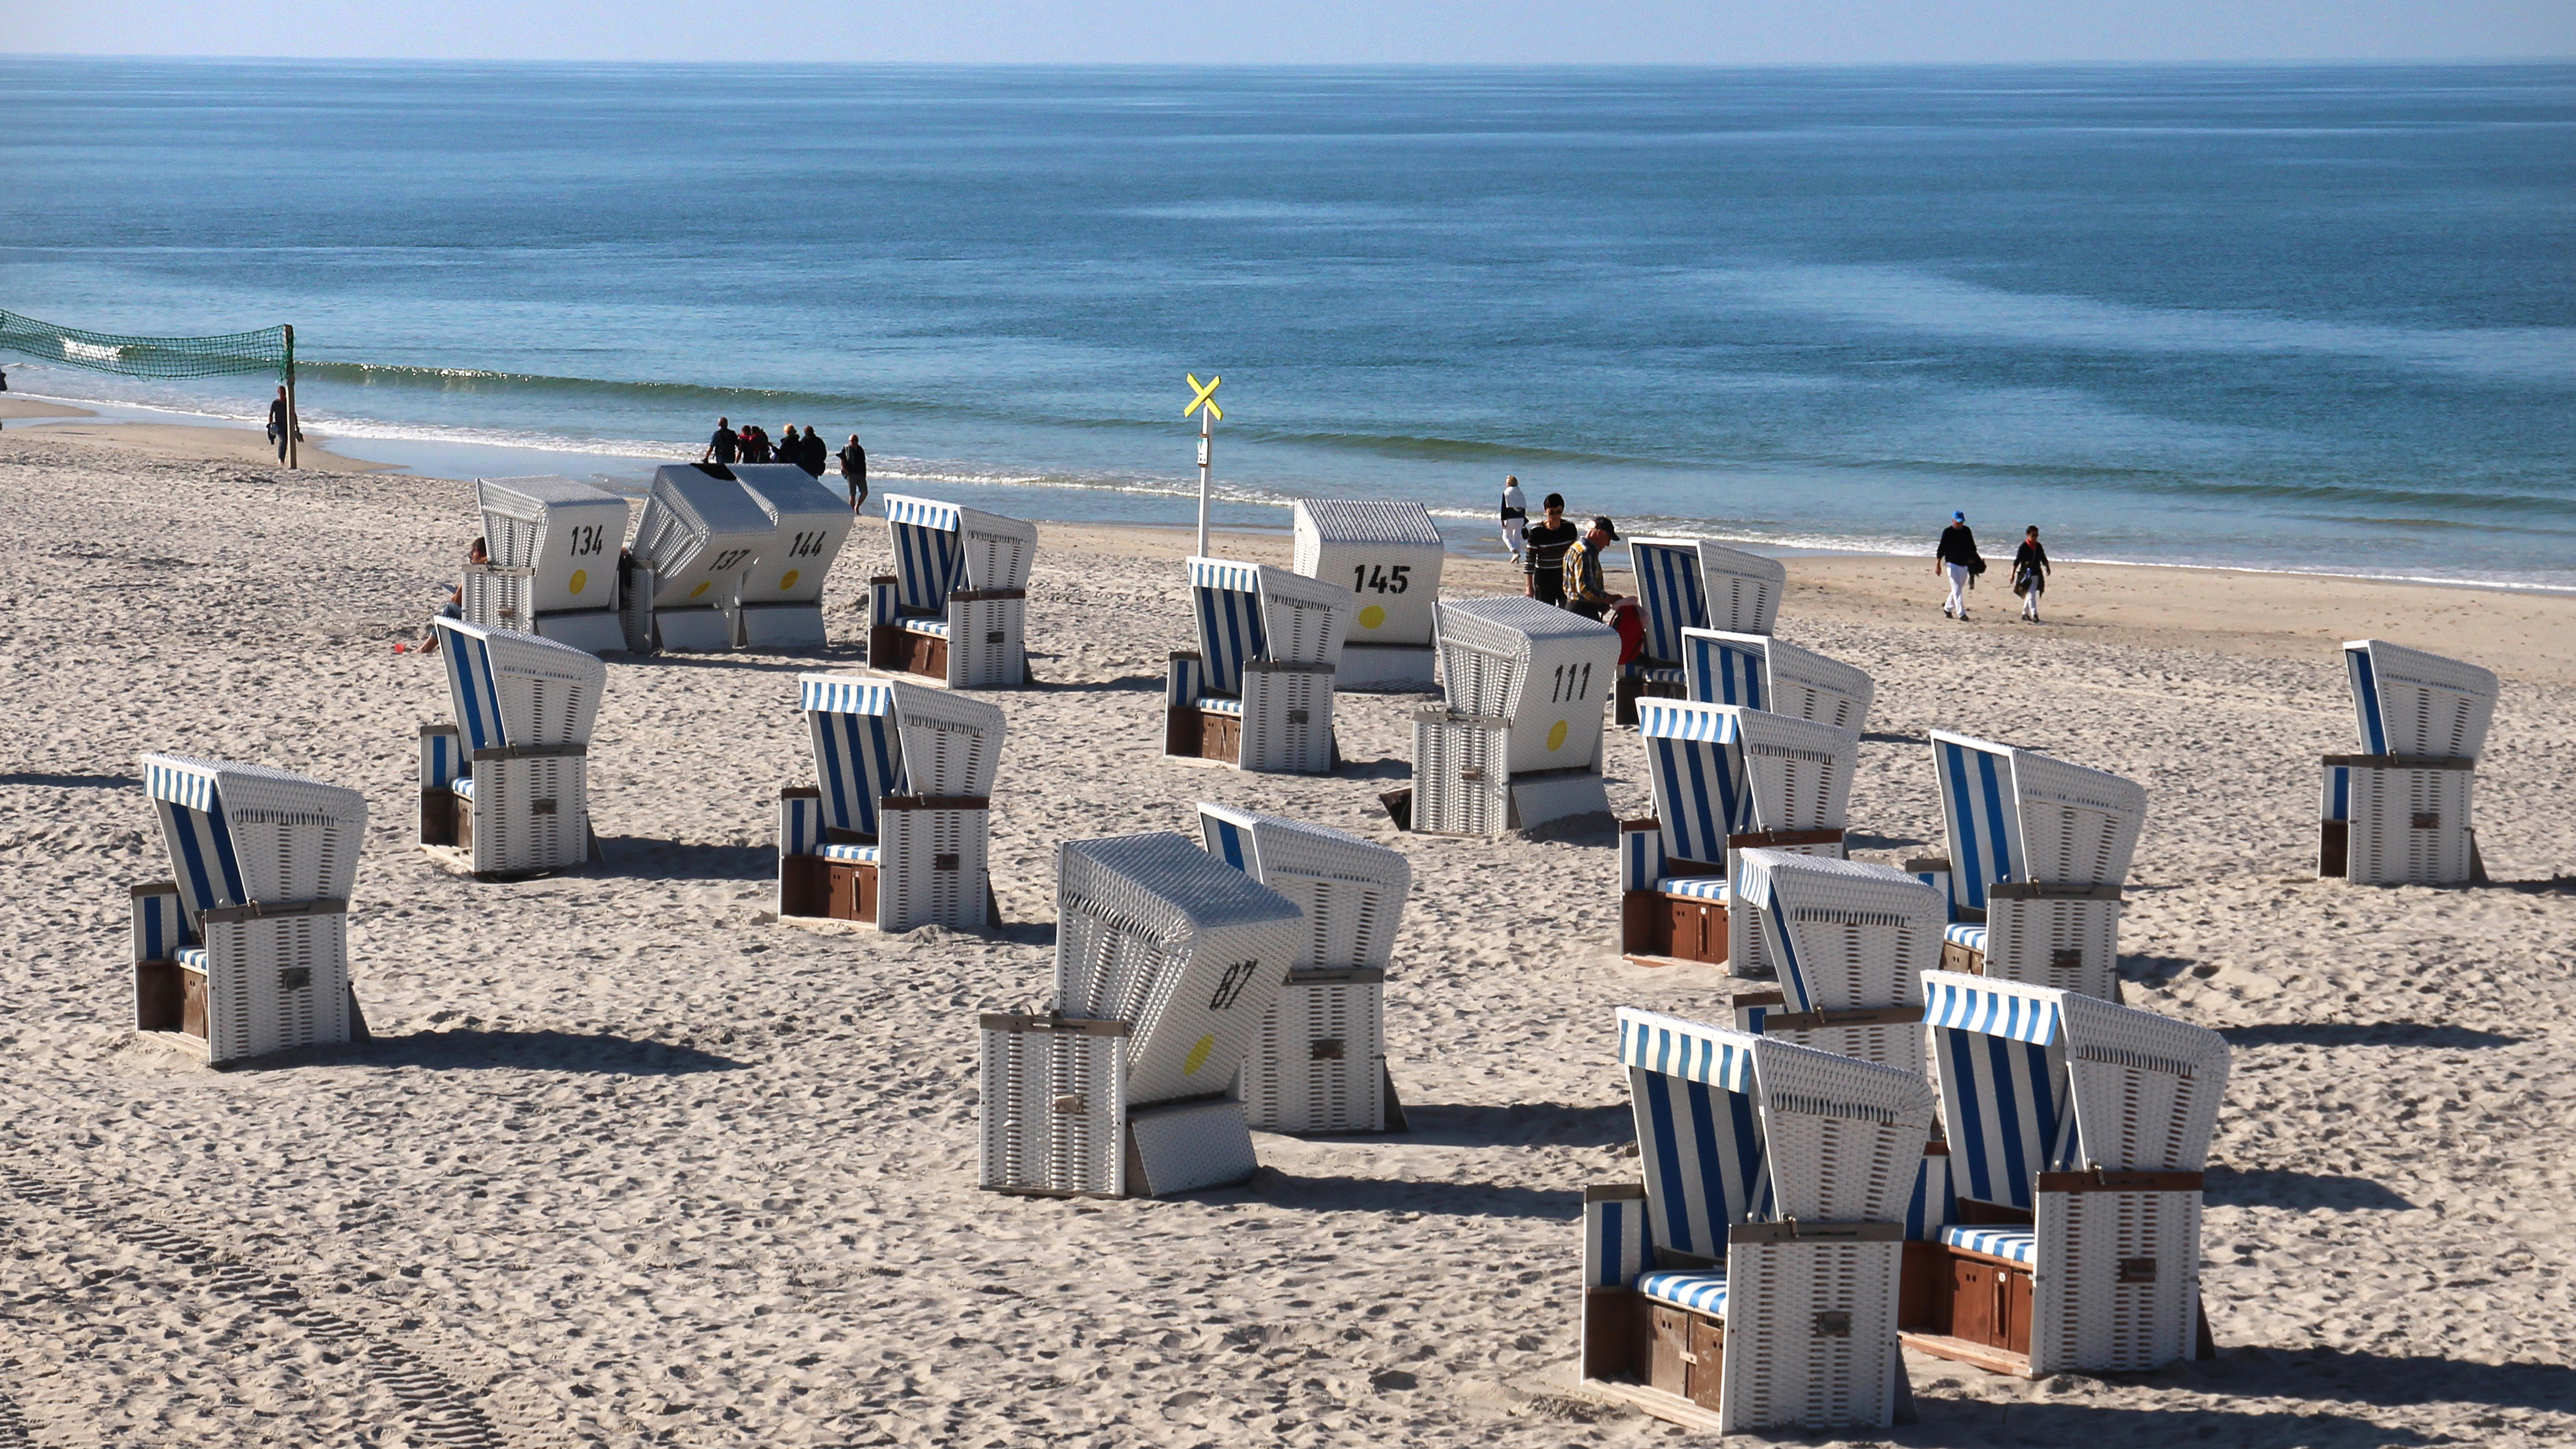 Euro Topless Beach Videos - 15 best nude beaches around the world | CNN Travel